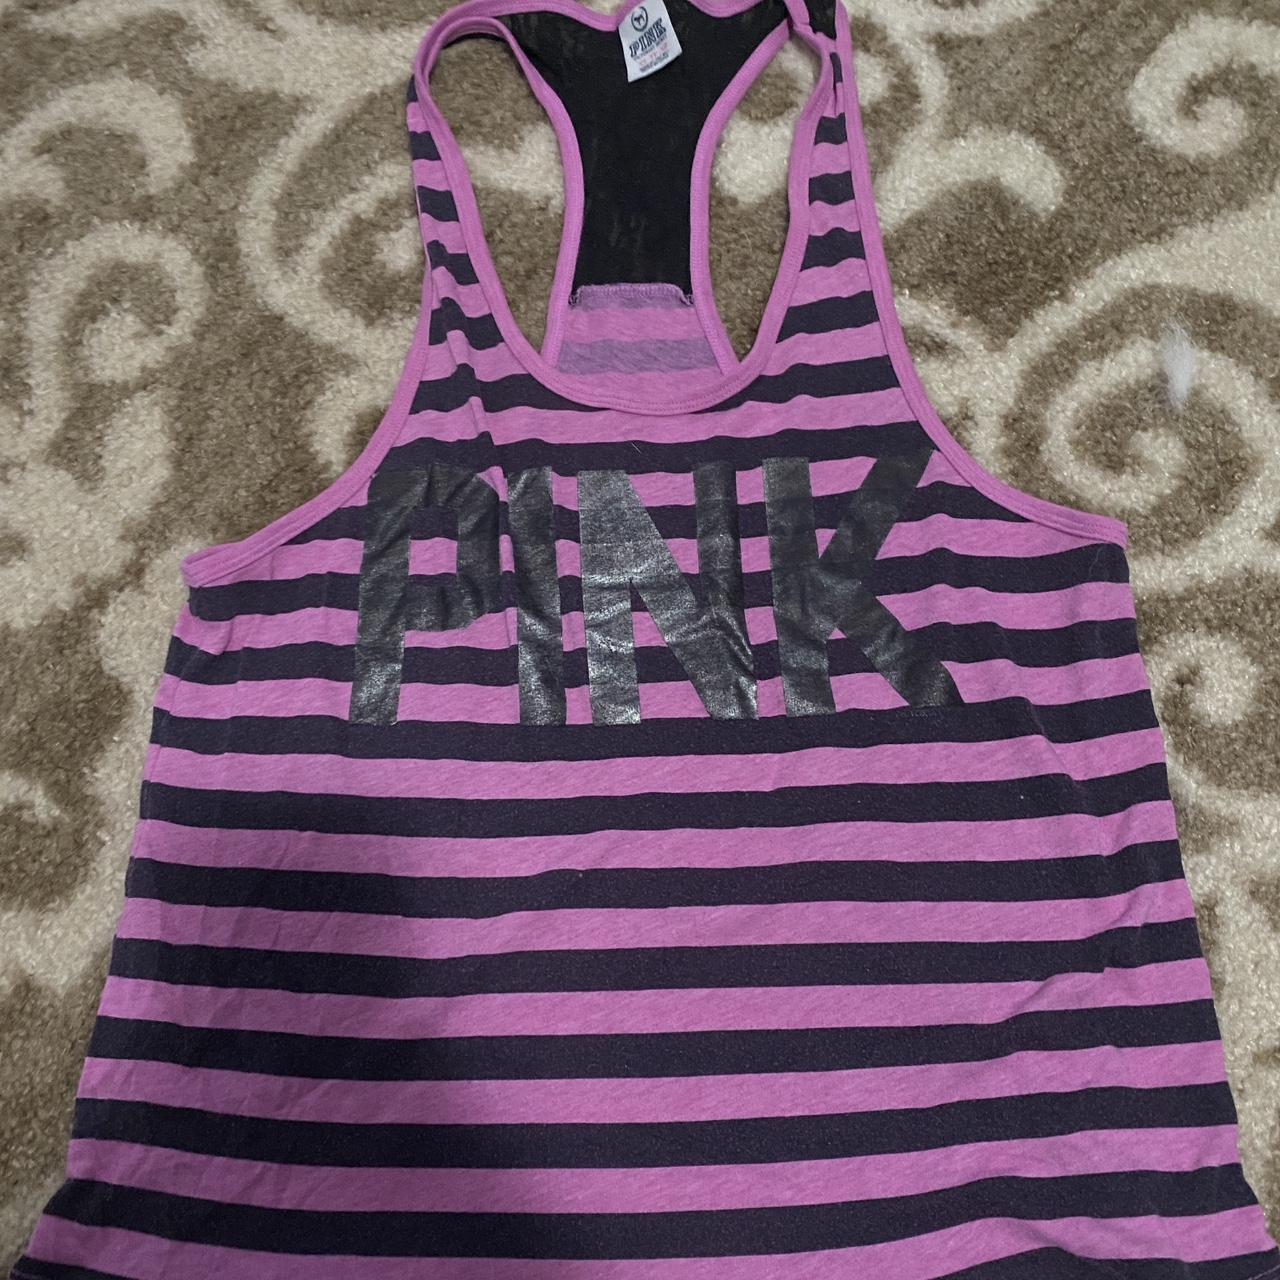 PINK Victoria Secrets Tank Top Size XS Black & - Depop